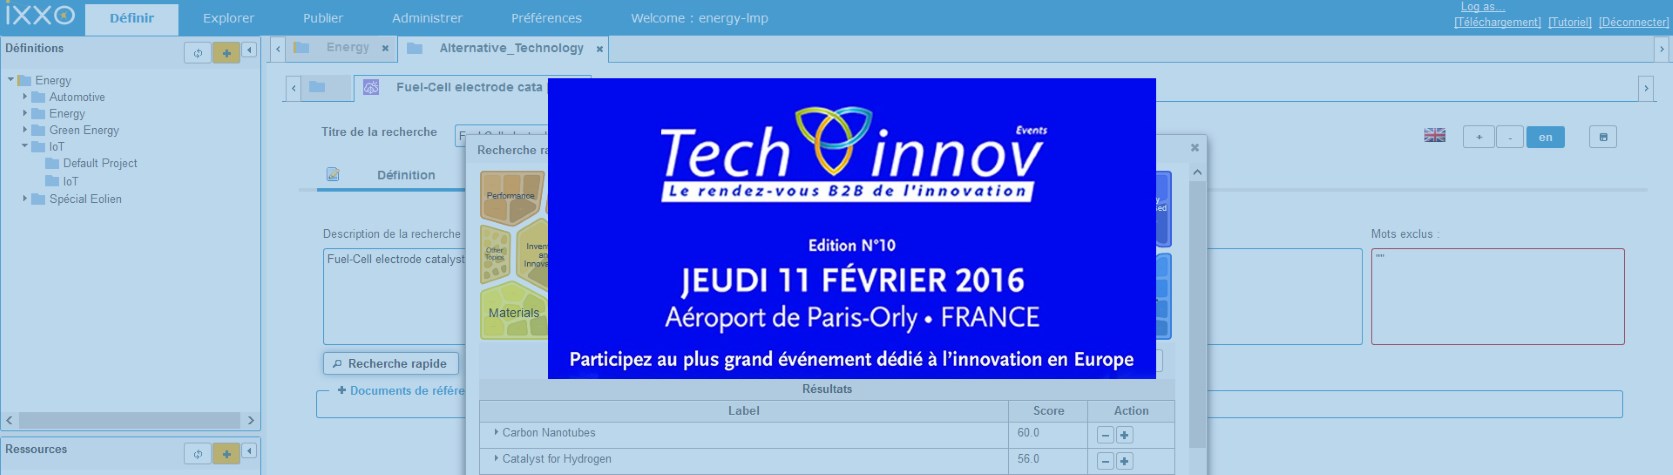 Techinnov 2016 : veille technologique et innovation B2B